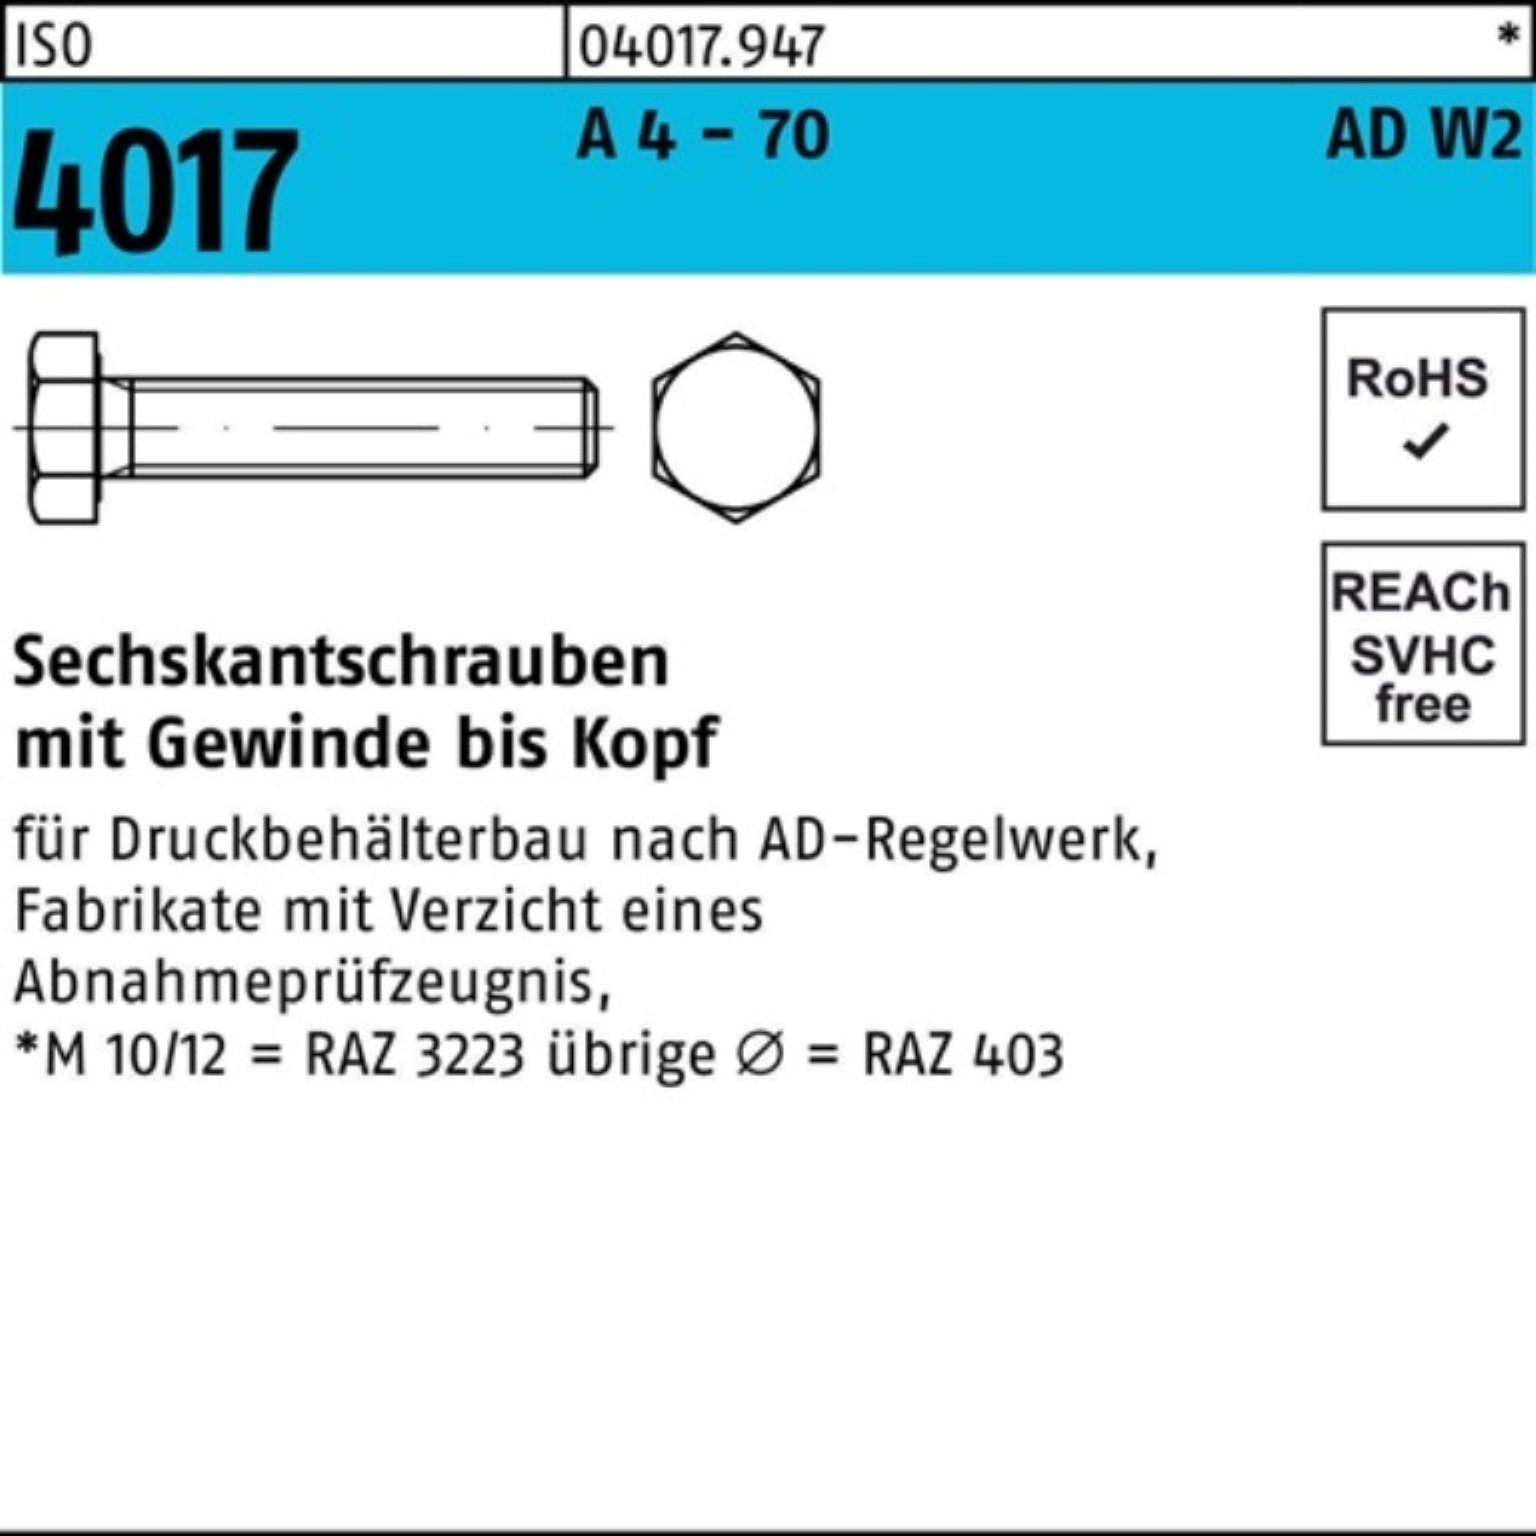 Bufab Sechskantschraube 100er Pack Sechskantschraube ISO 4017 VG M10x 16 A 4 - 70 AD-W2 100 St